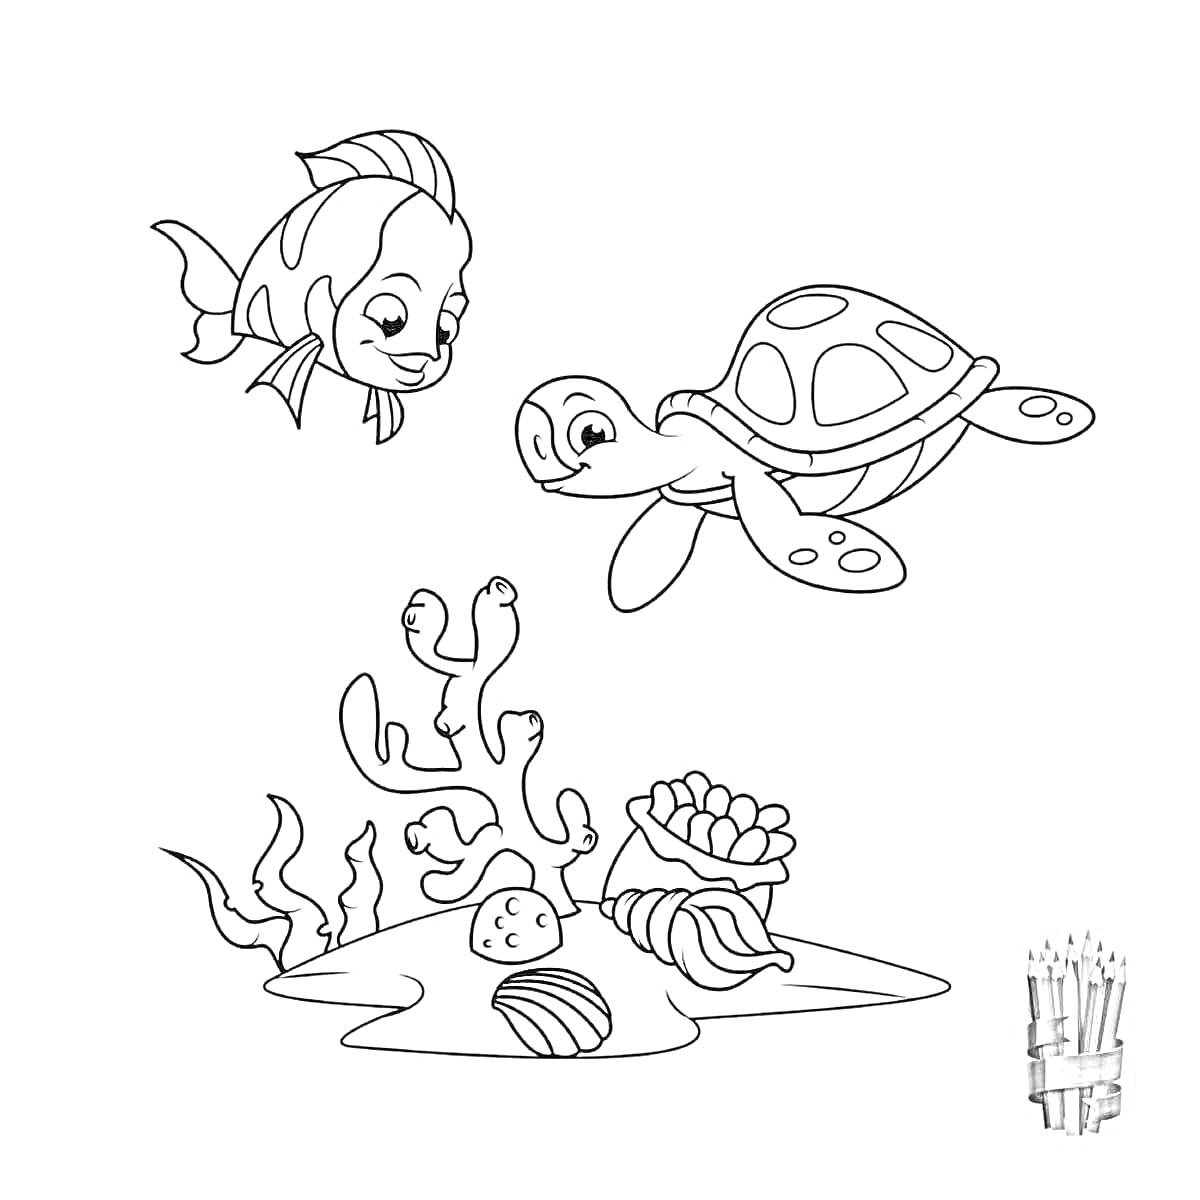 Рыба и черепаха около морского дна с водорослями и раковинами